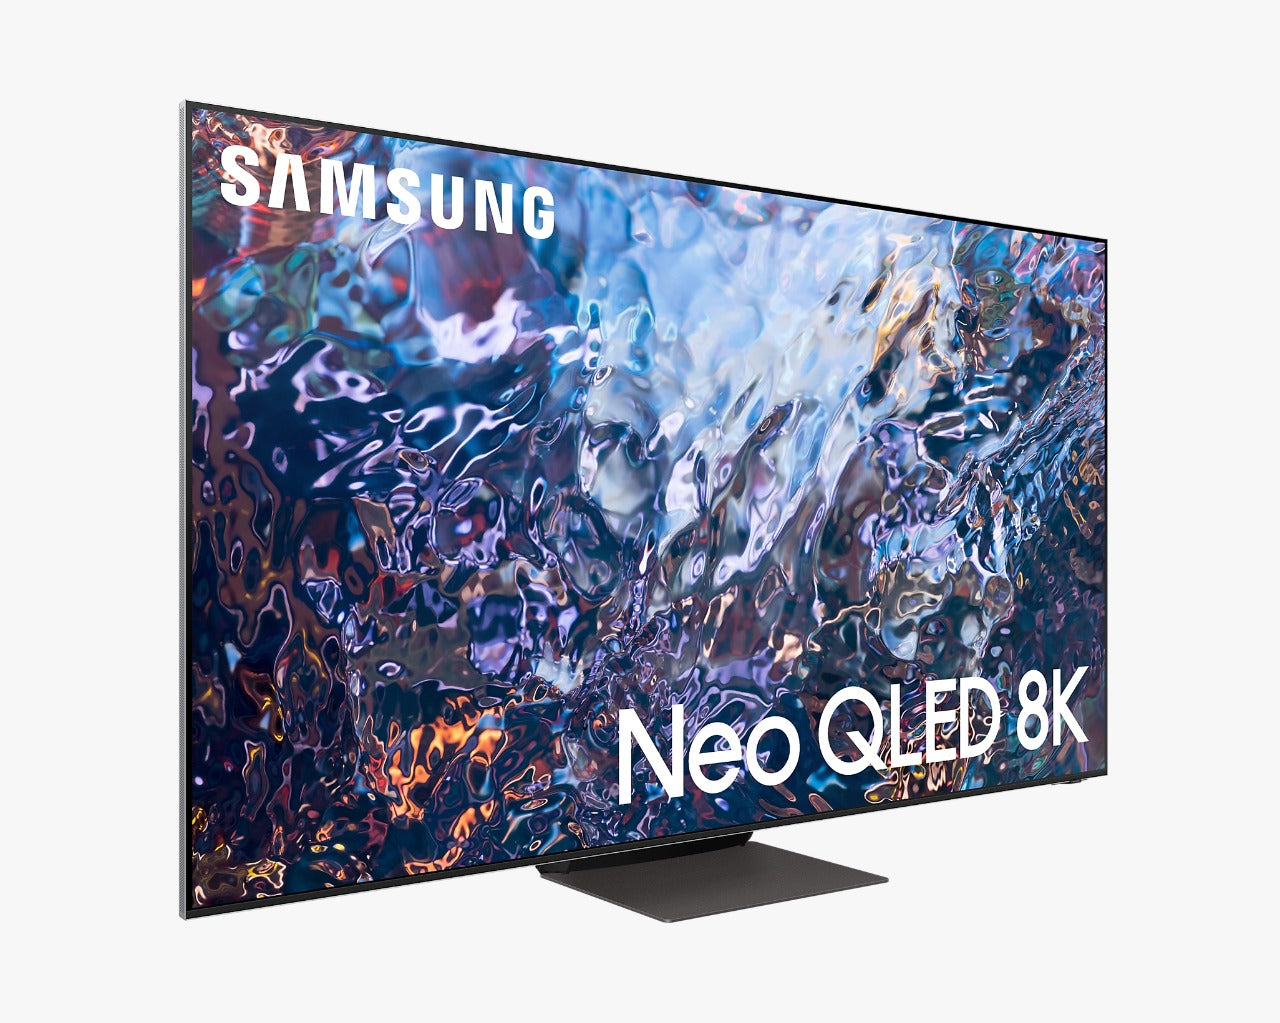 Samsung 1m 63cm (65") QN700A Neo QLED 8K Smart TV